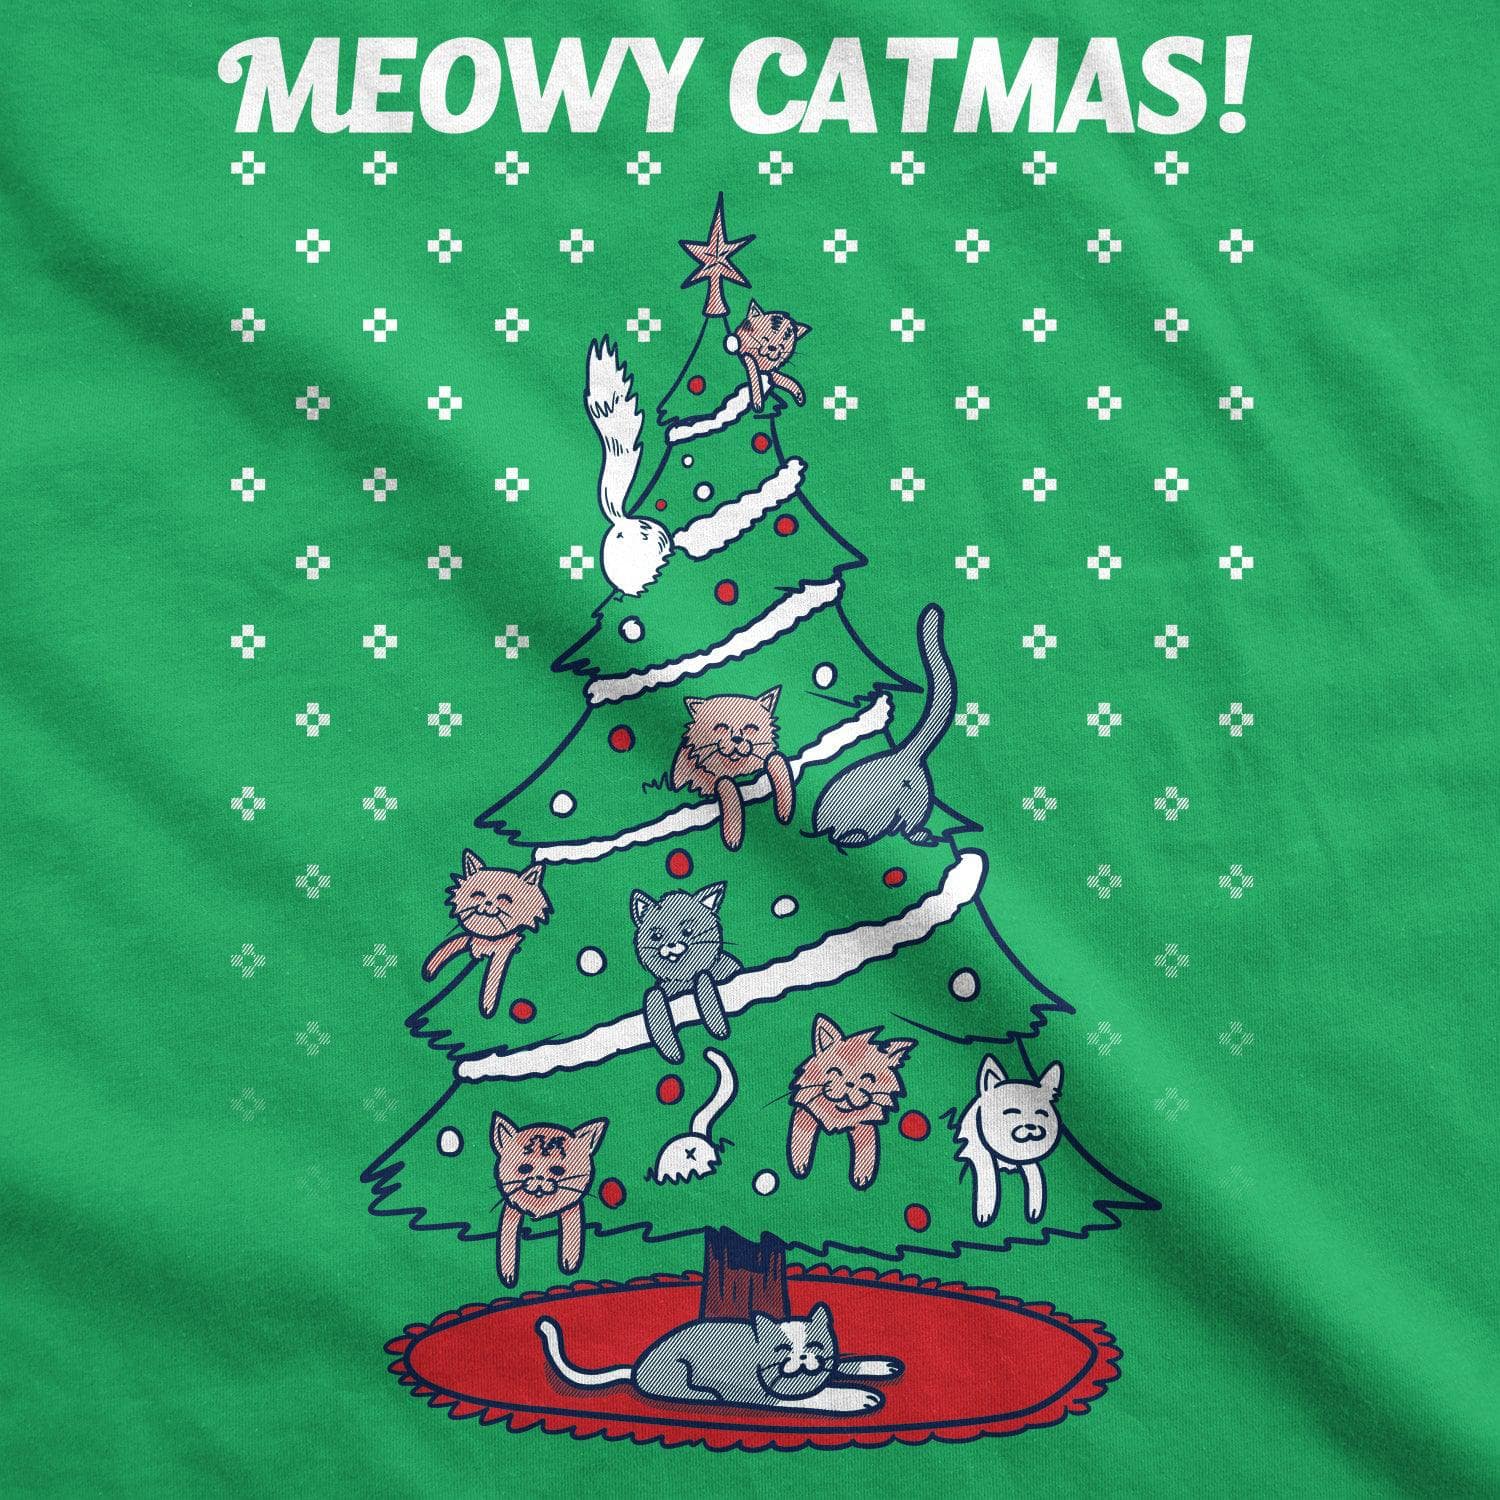 Meowy Christmas Cat Tree Ugly Christmas Sweater Women's Tshirt  -  Crazy Dog T-Shirts